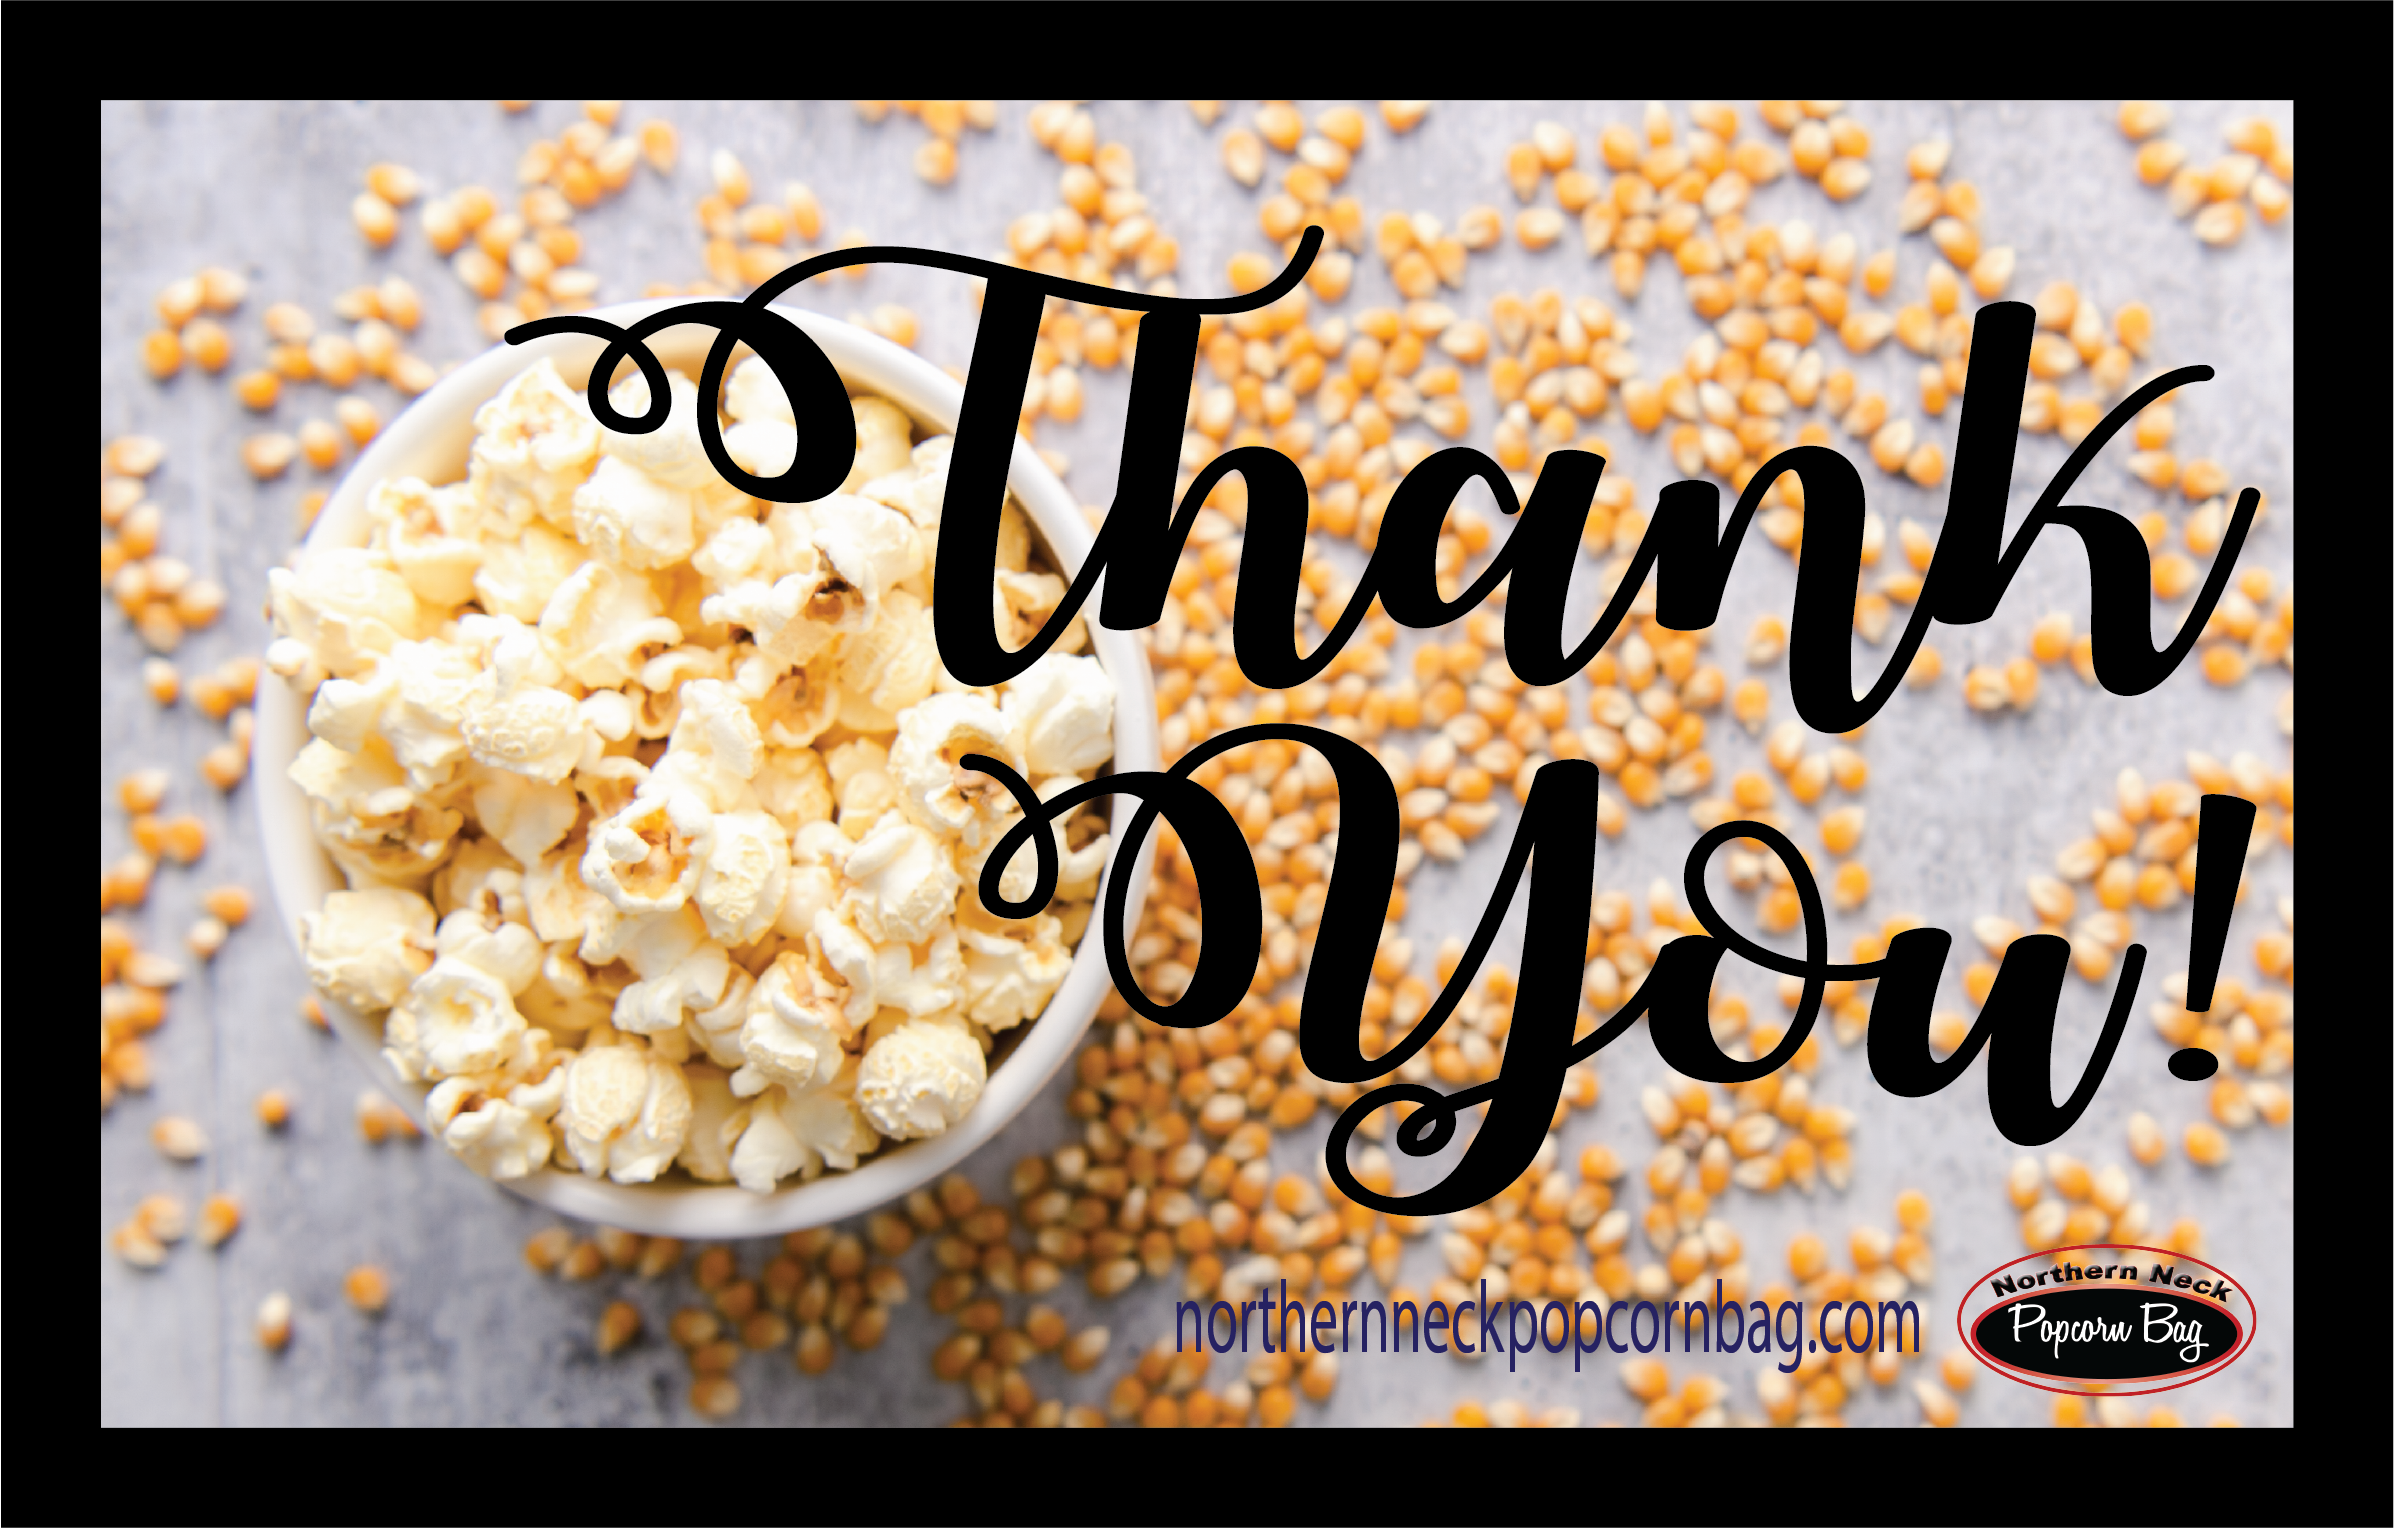 THANK YOU Popcorn Box - Northern Neck Popcorn Bag